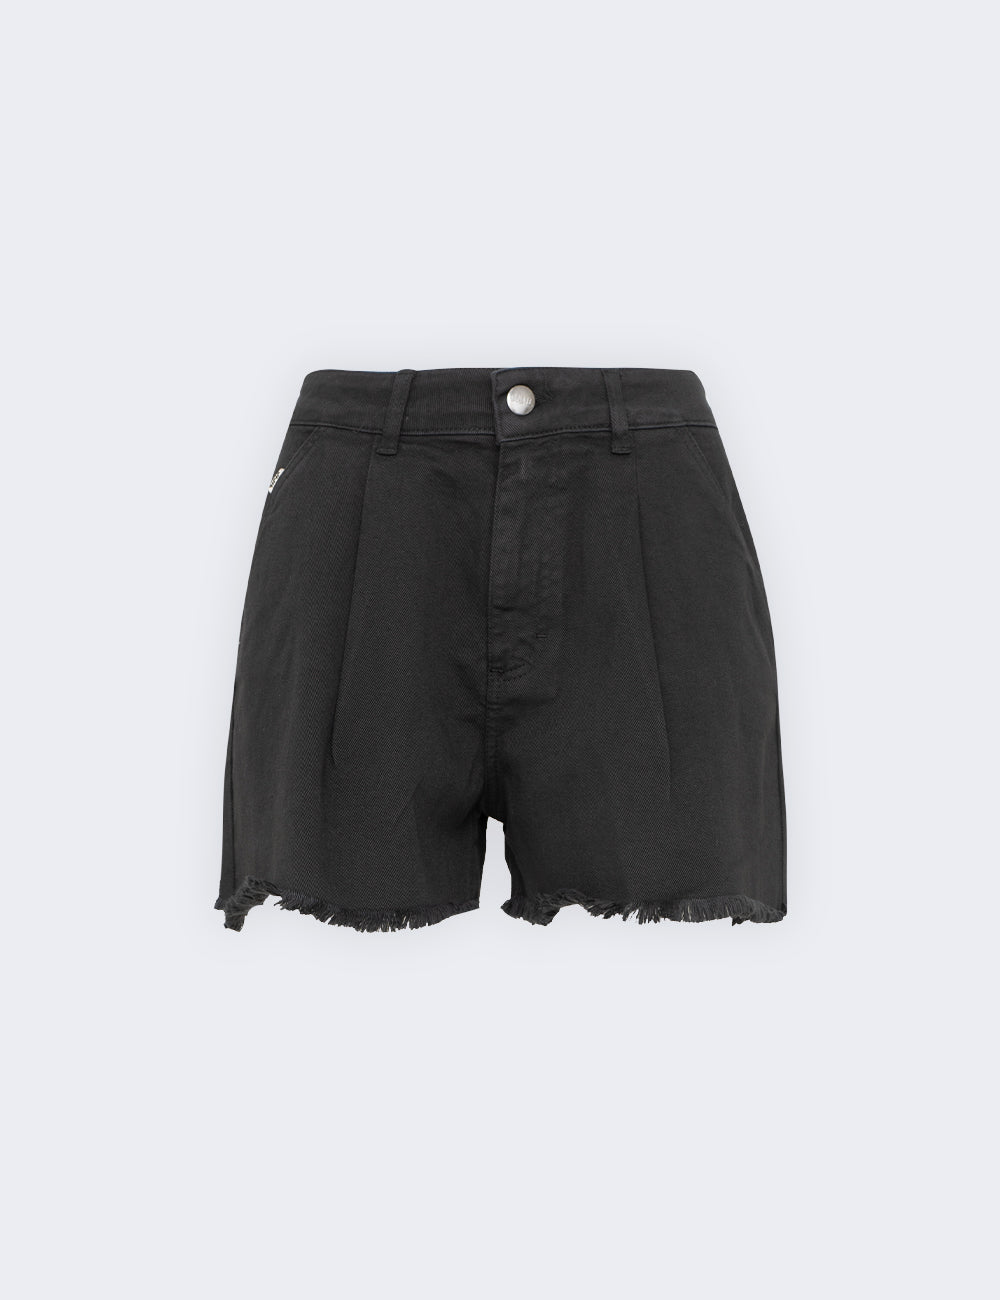 Cotton shorts with fringed edge